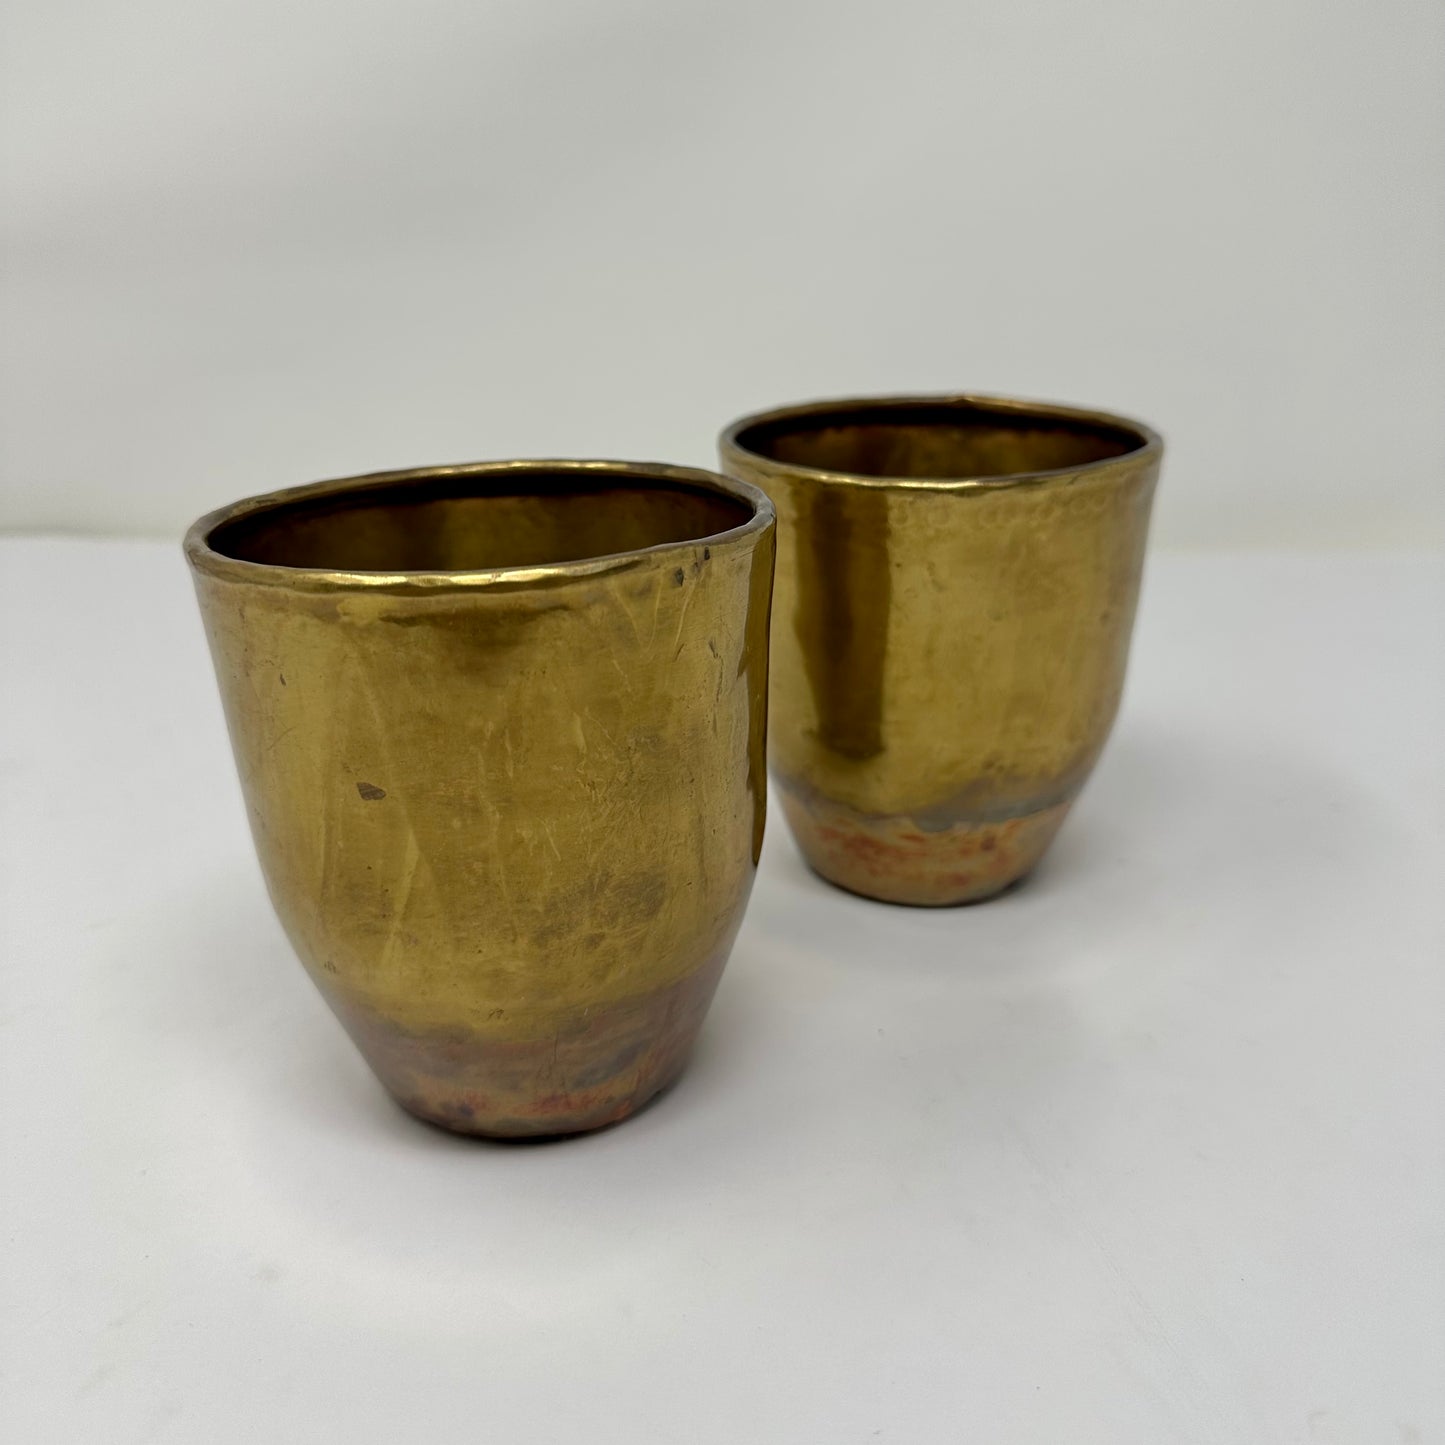 Antique Brass Vase - Set of 2